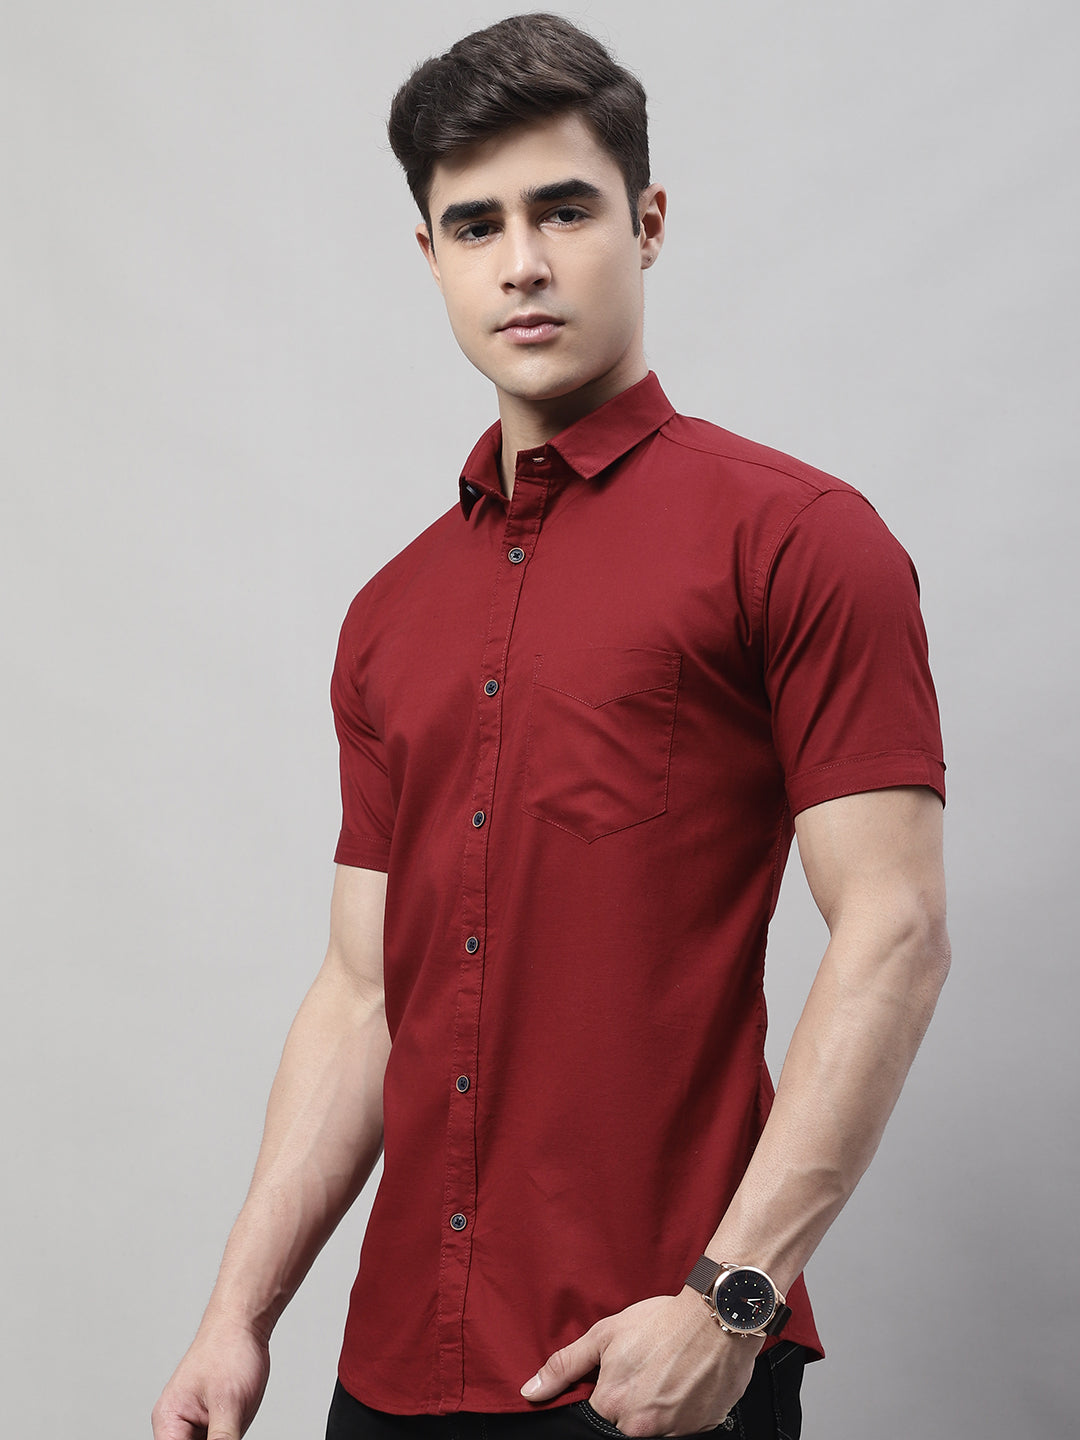 Unique and Fashionable Pure Cotton Half shirt - Maroon